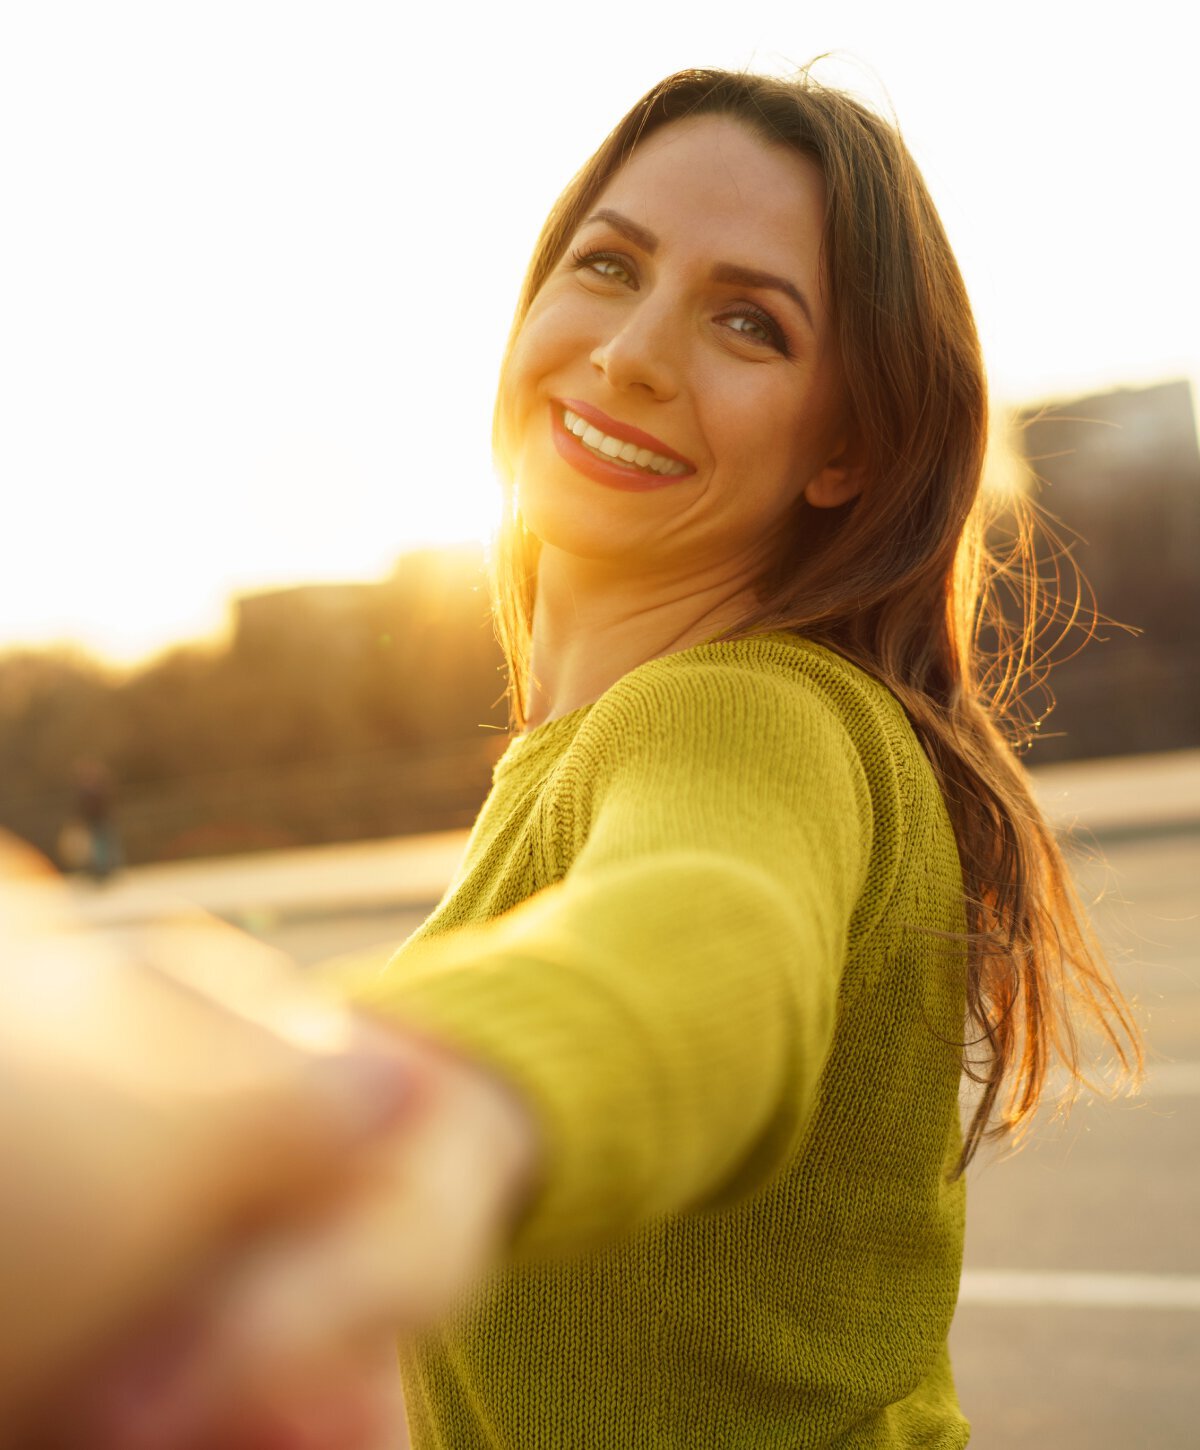 houston liquid facelift model smiling while reaching towards camera at sunset